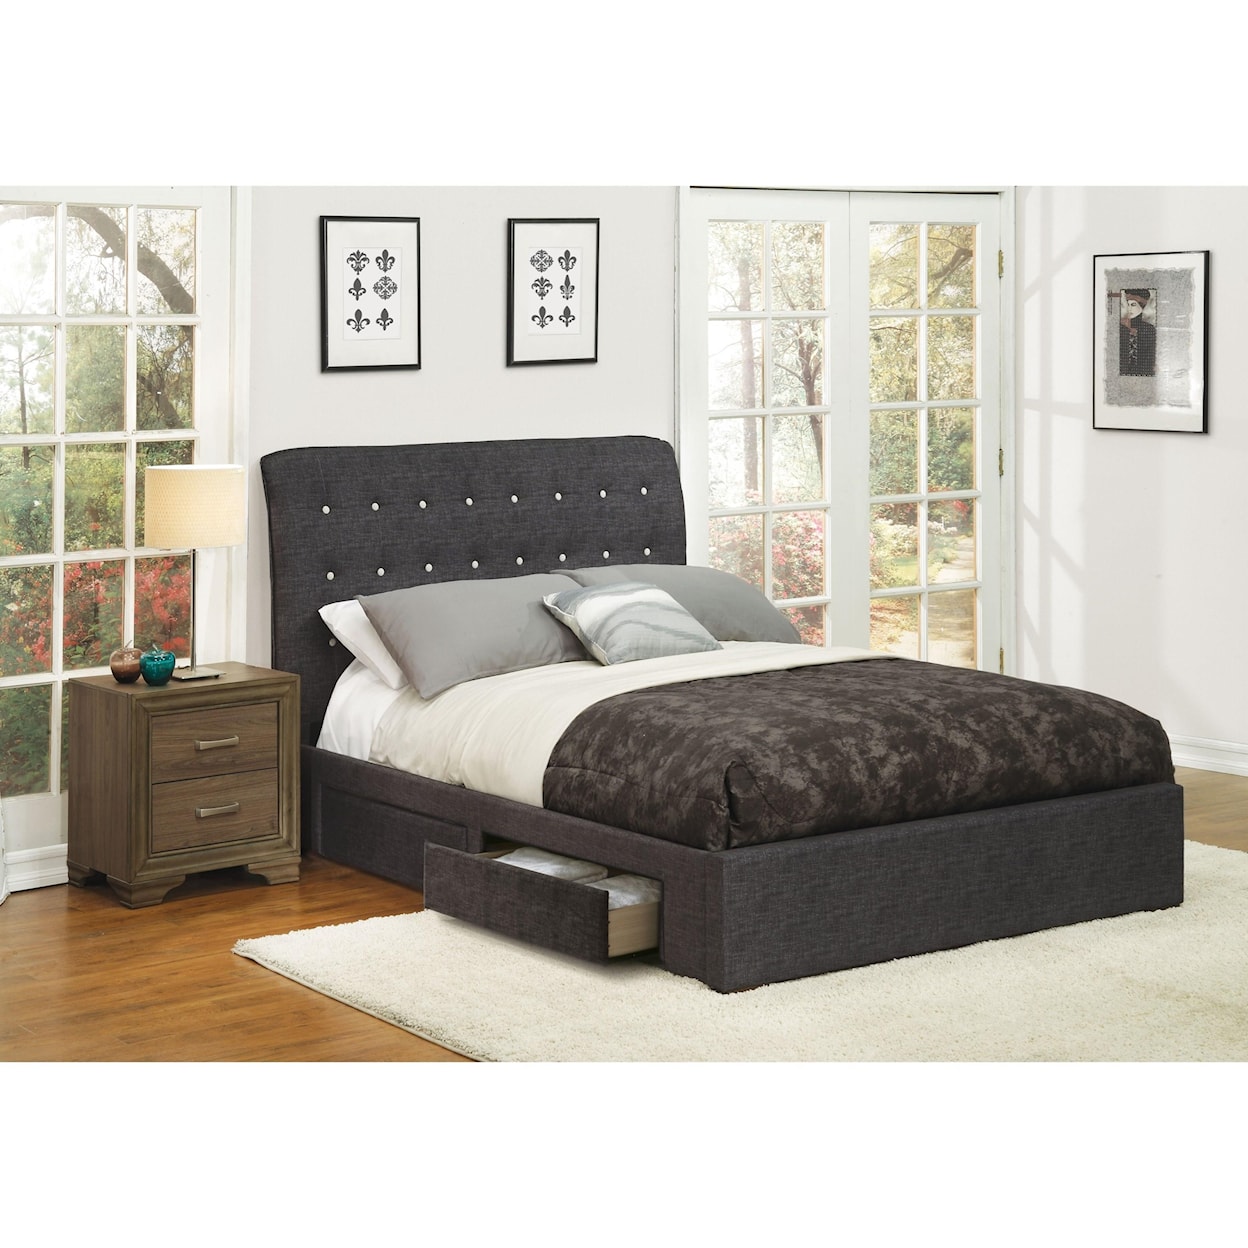 Acme Furniture Drorit Queen Bed w/Storage